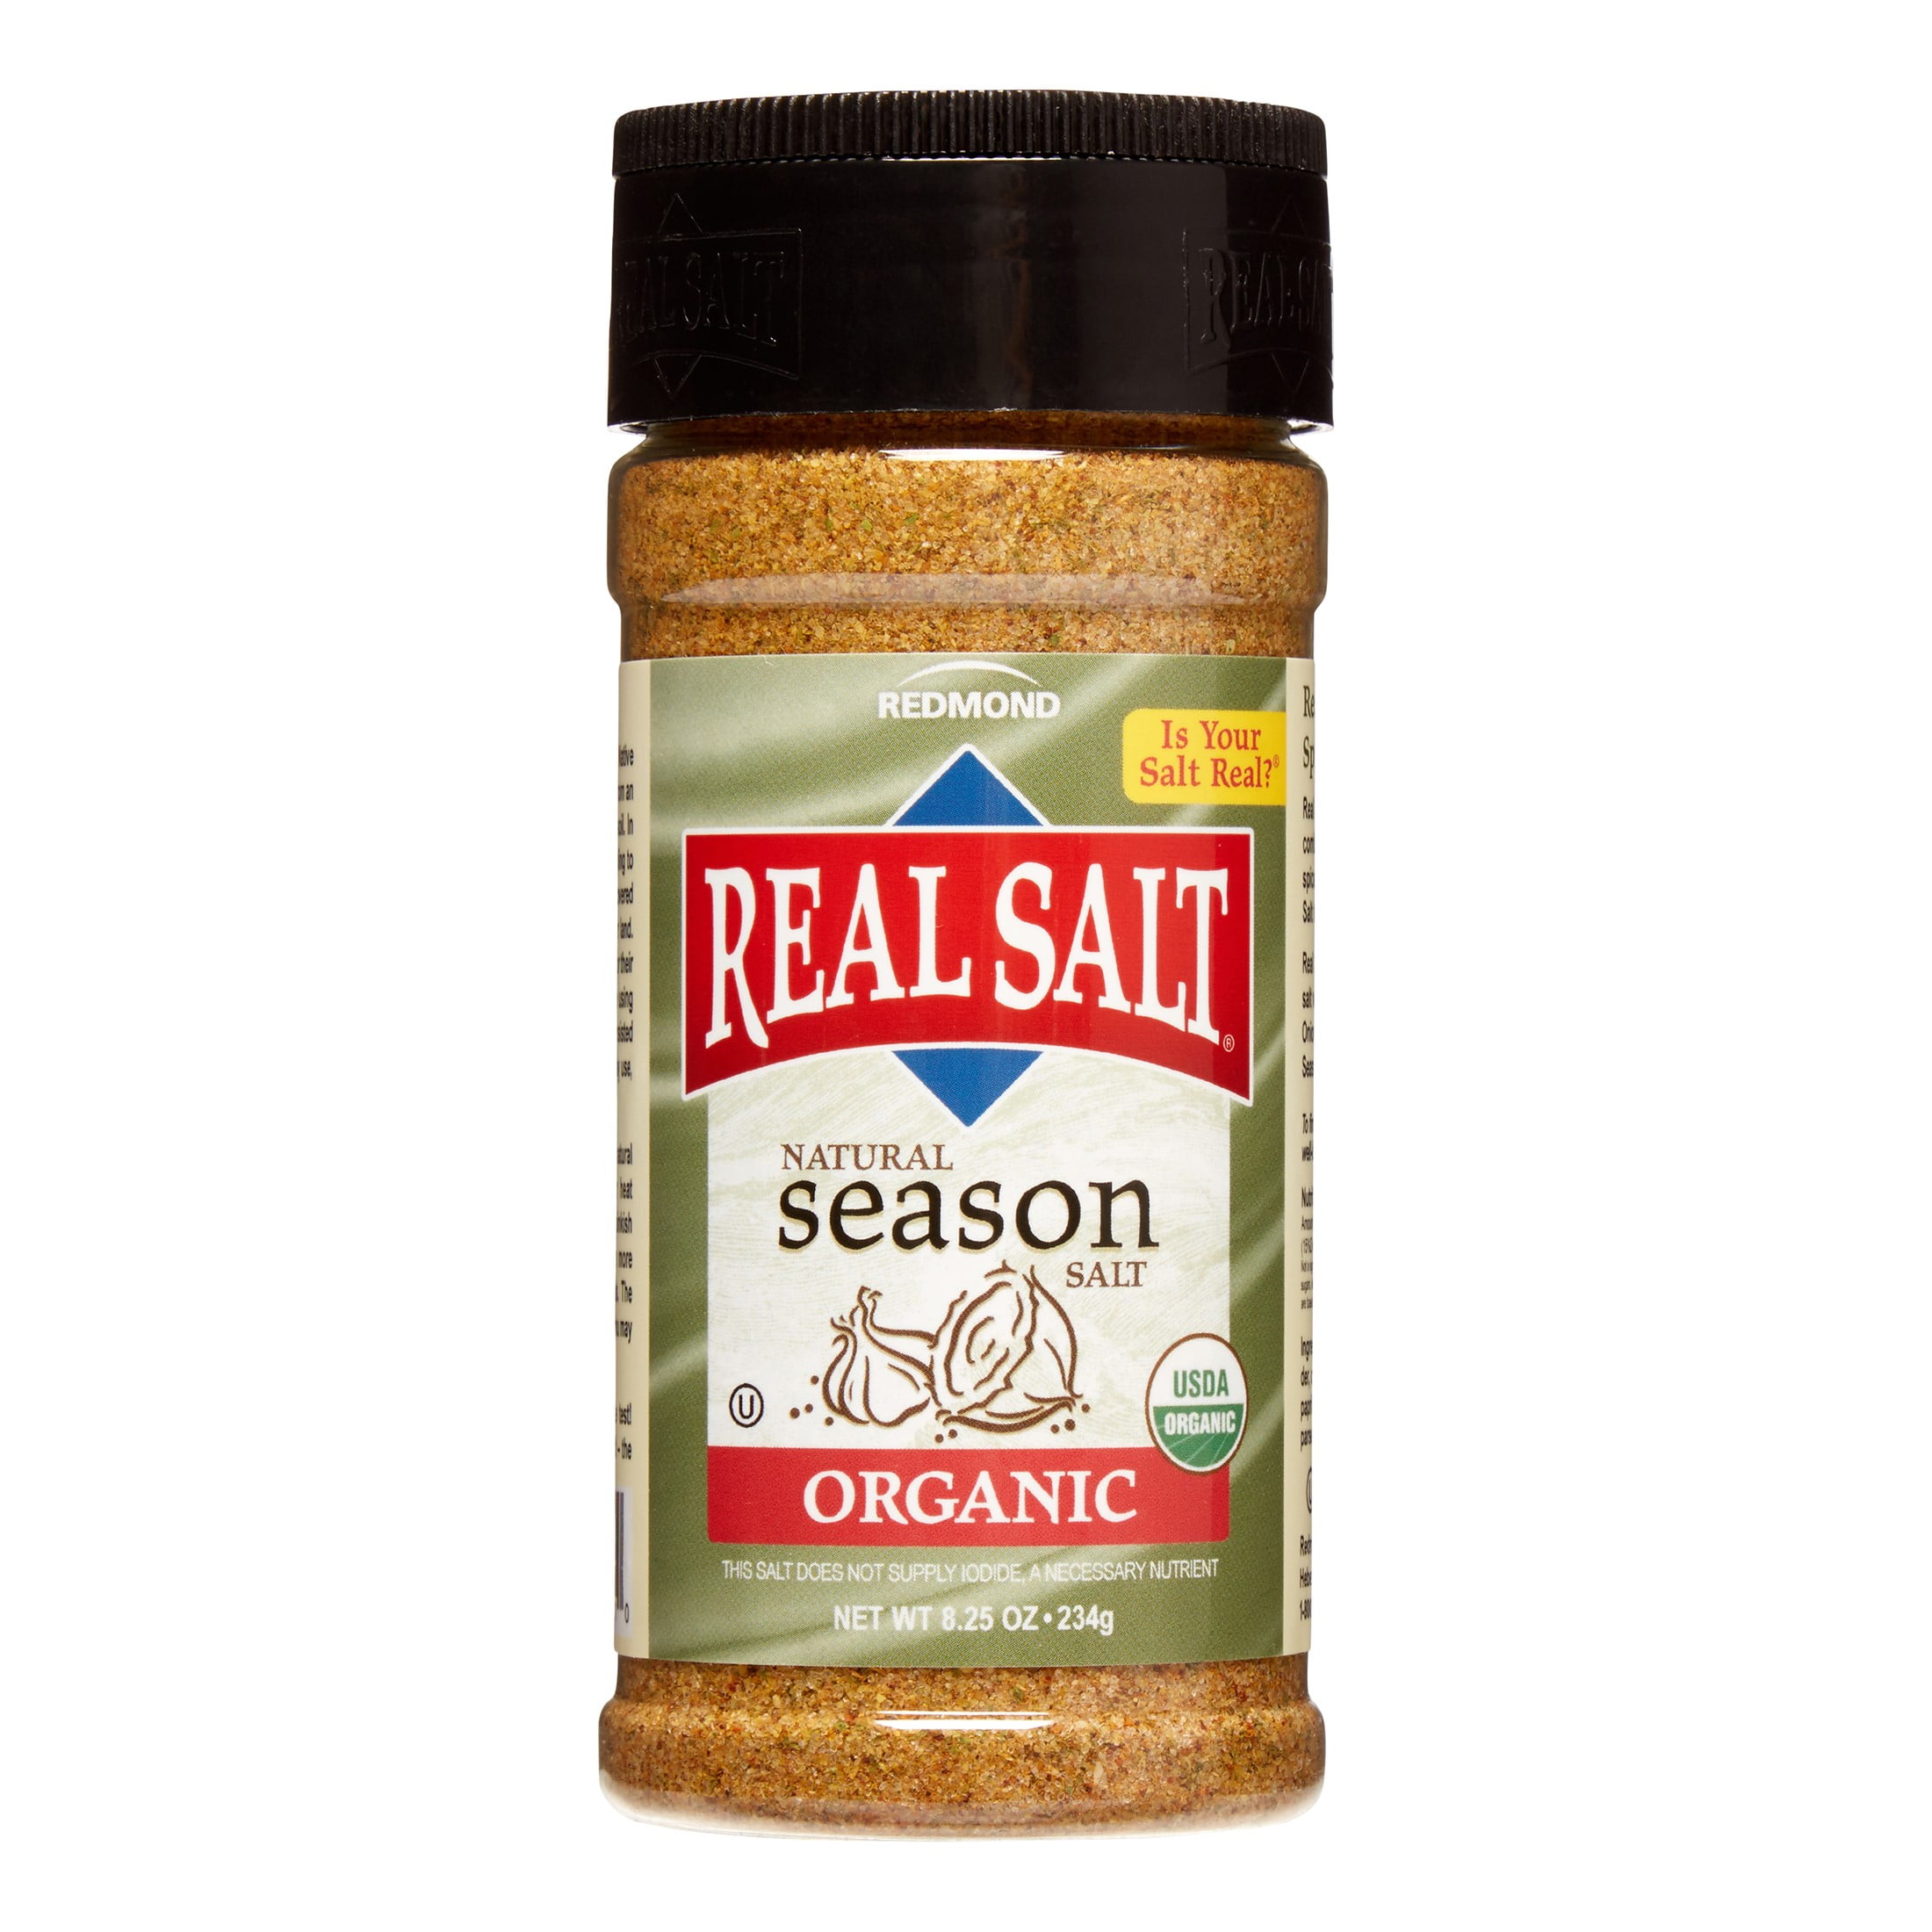 Redmond salt